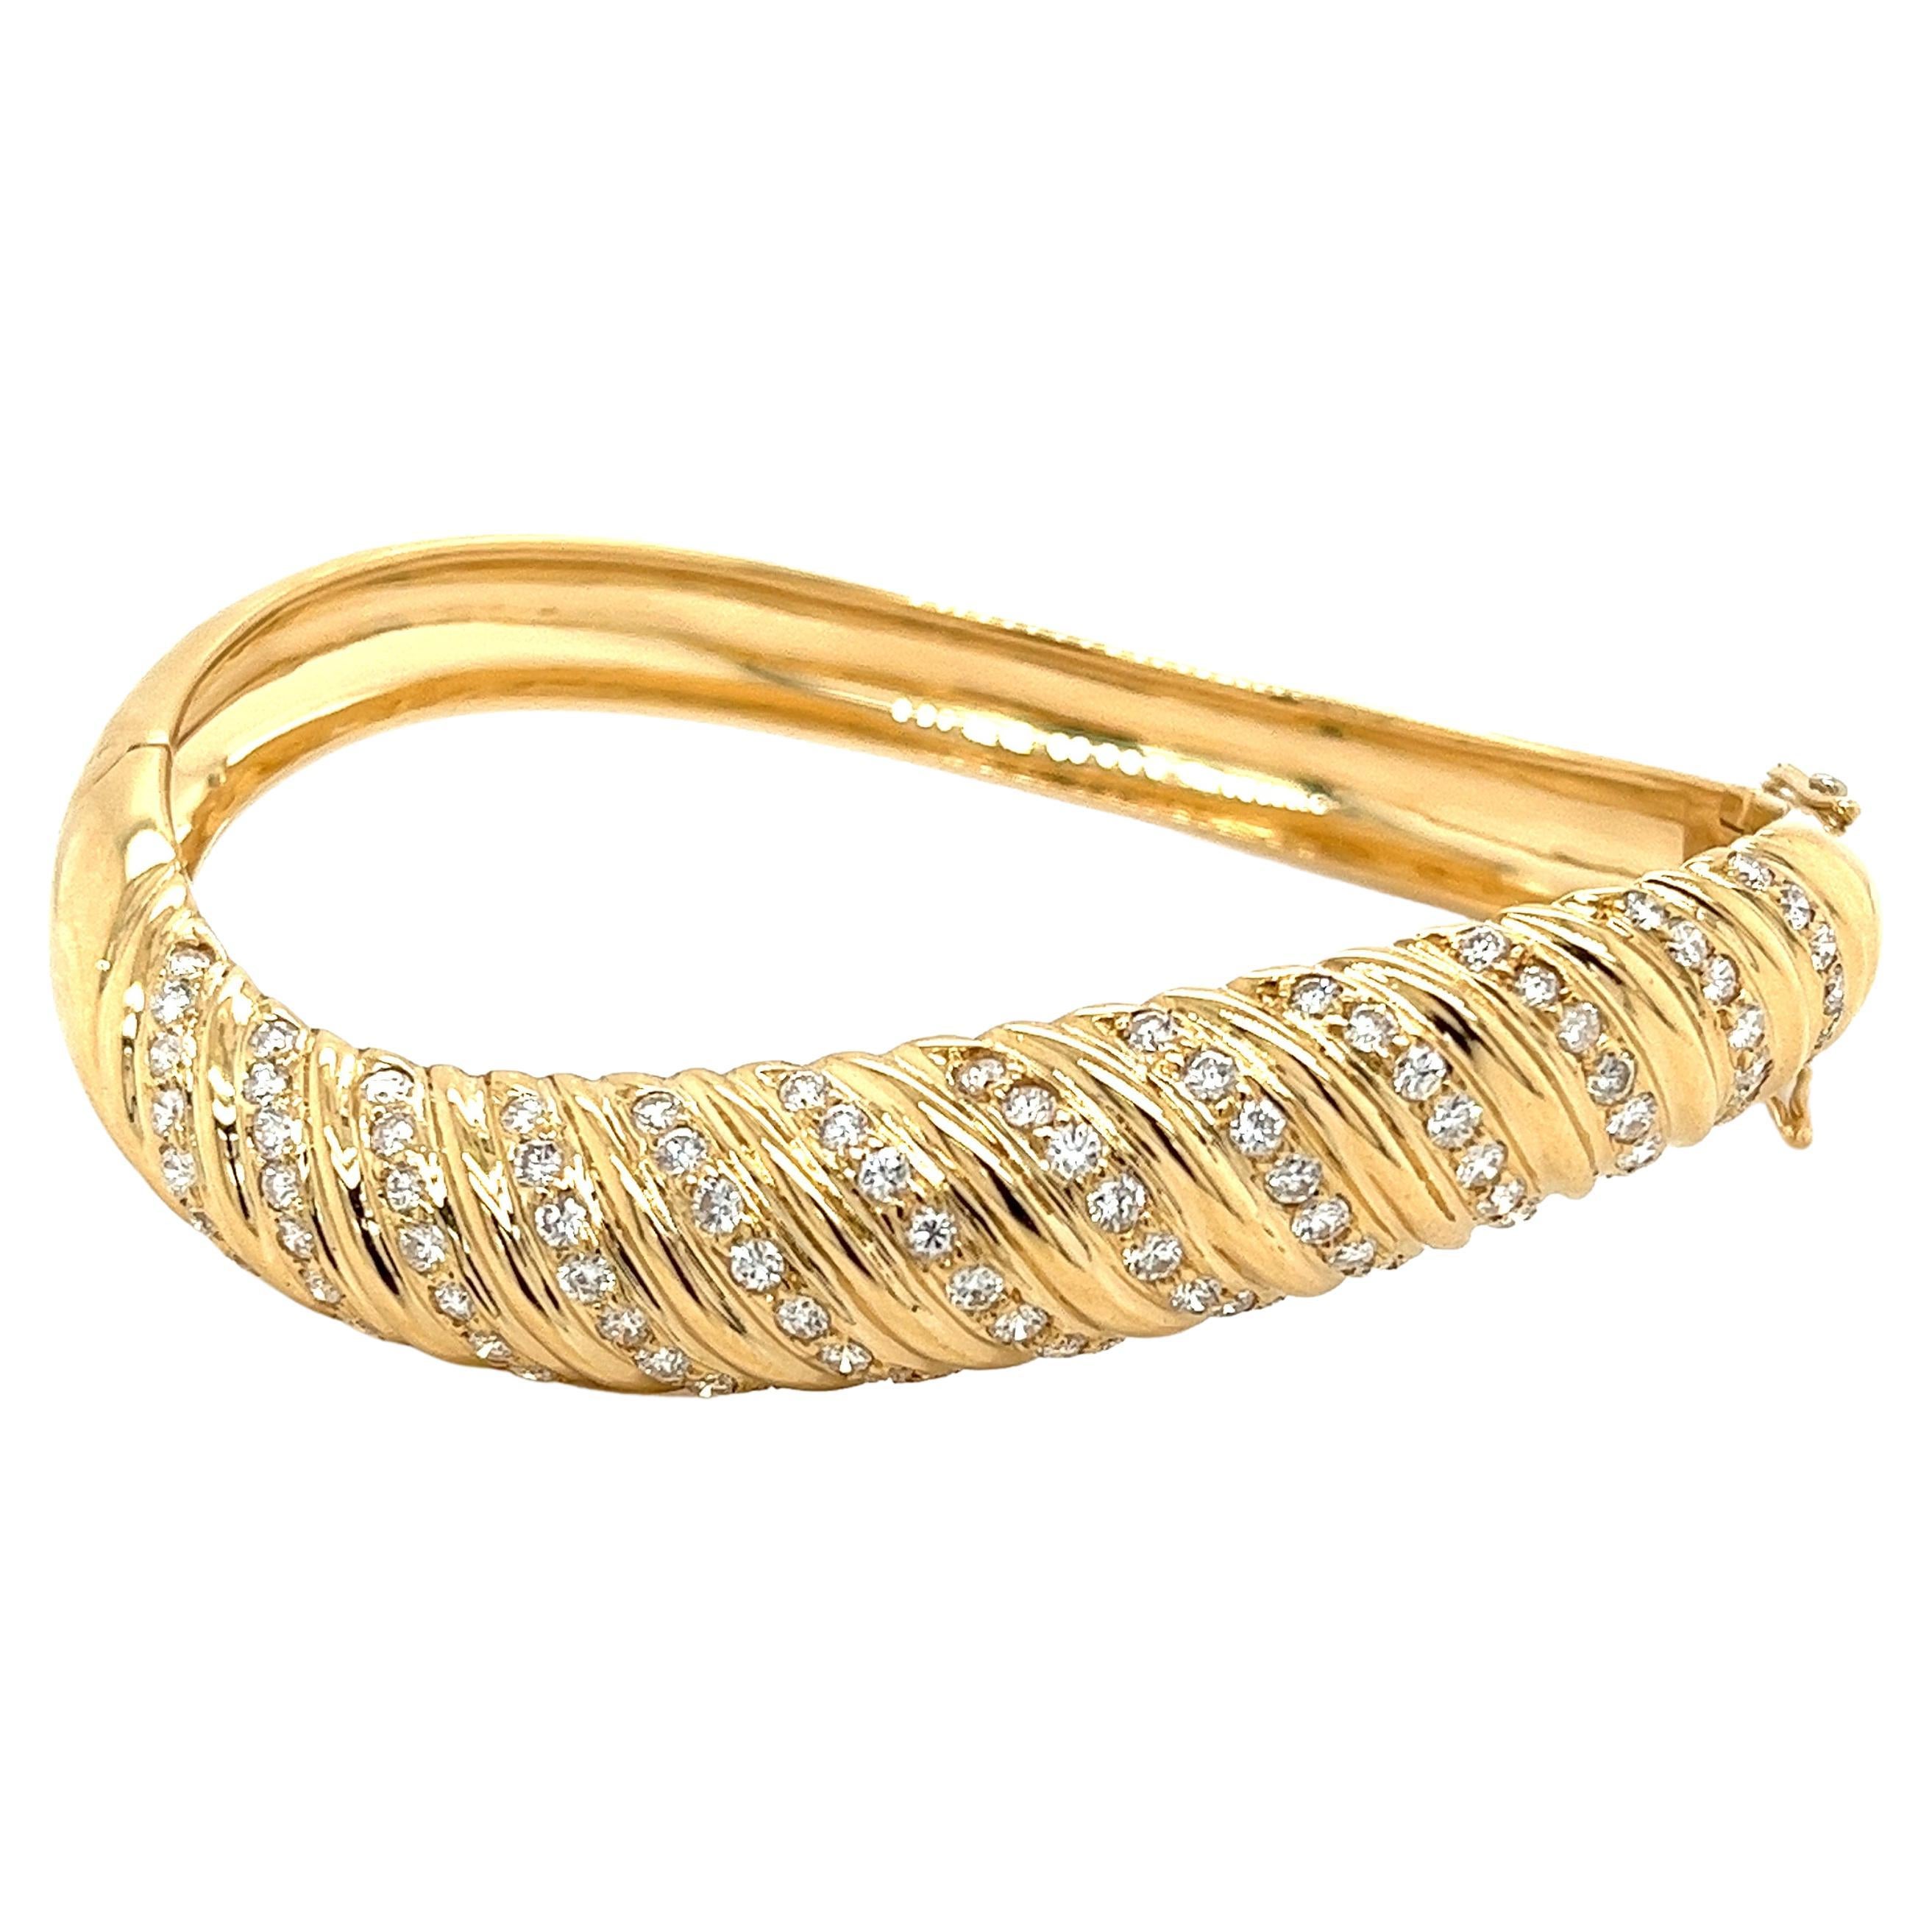 Wavy Curved 18K Gold Bangle Bracelet with Round Cut Diamonds